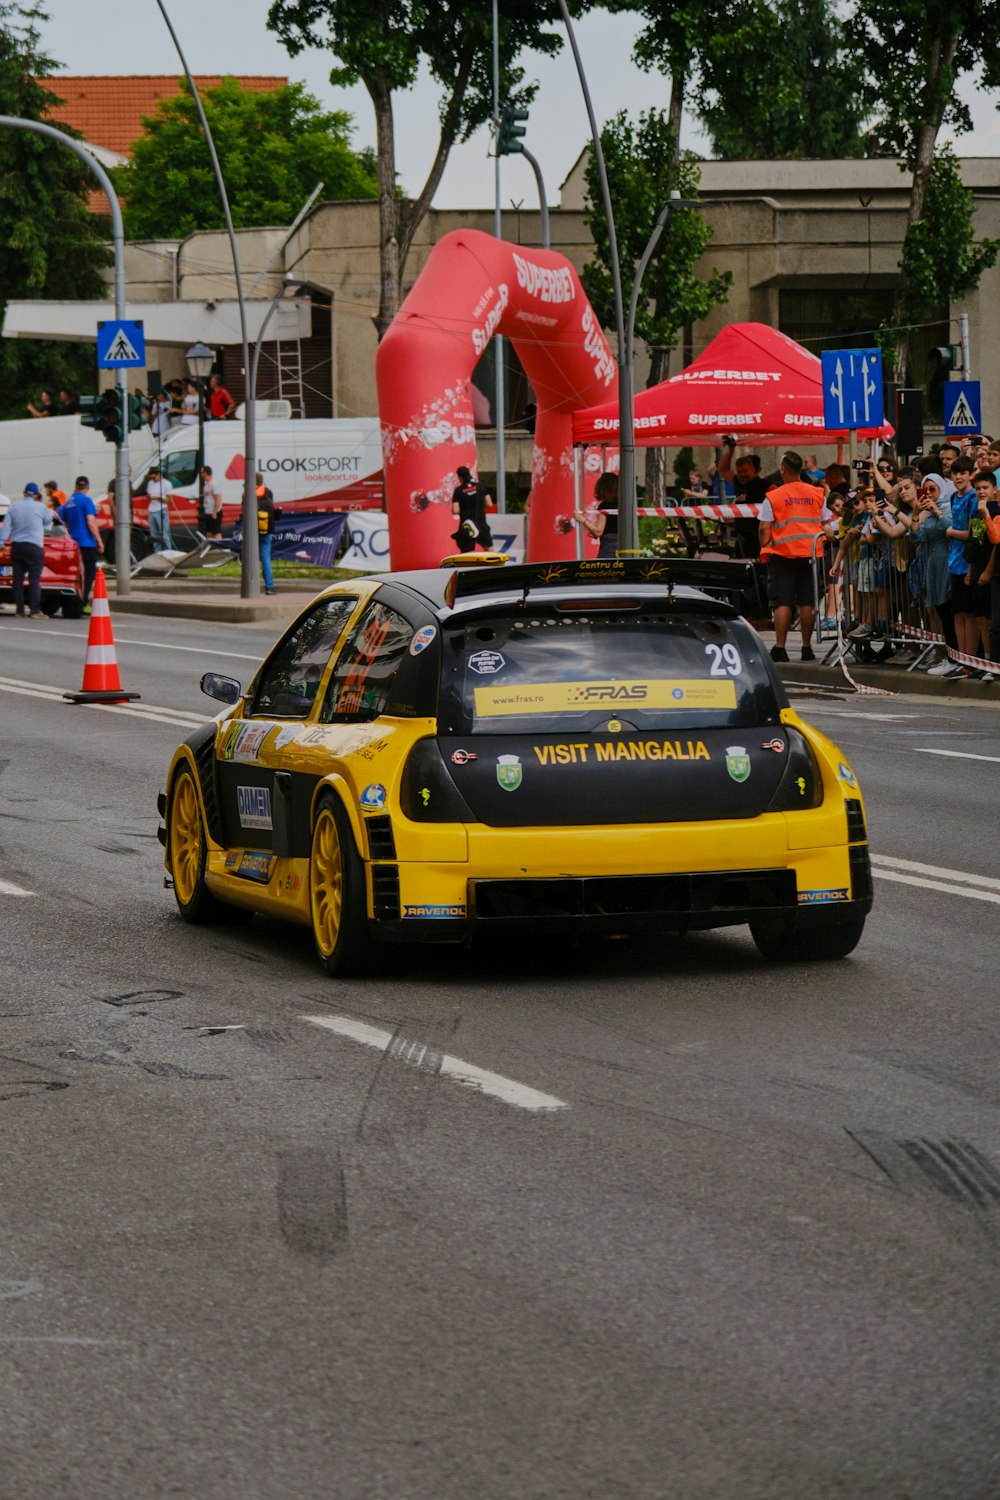 a yellow race car driving down a street